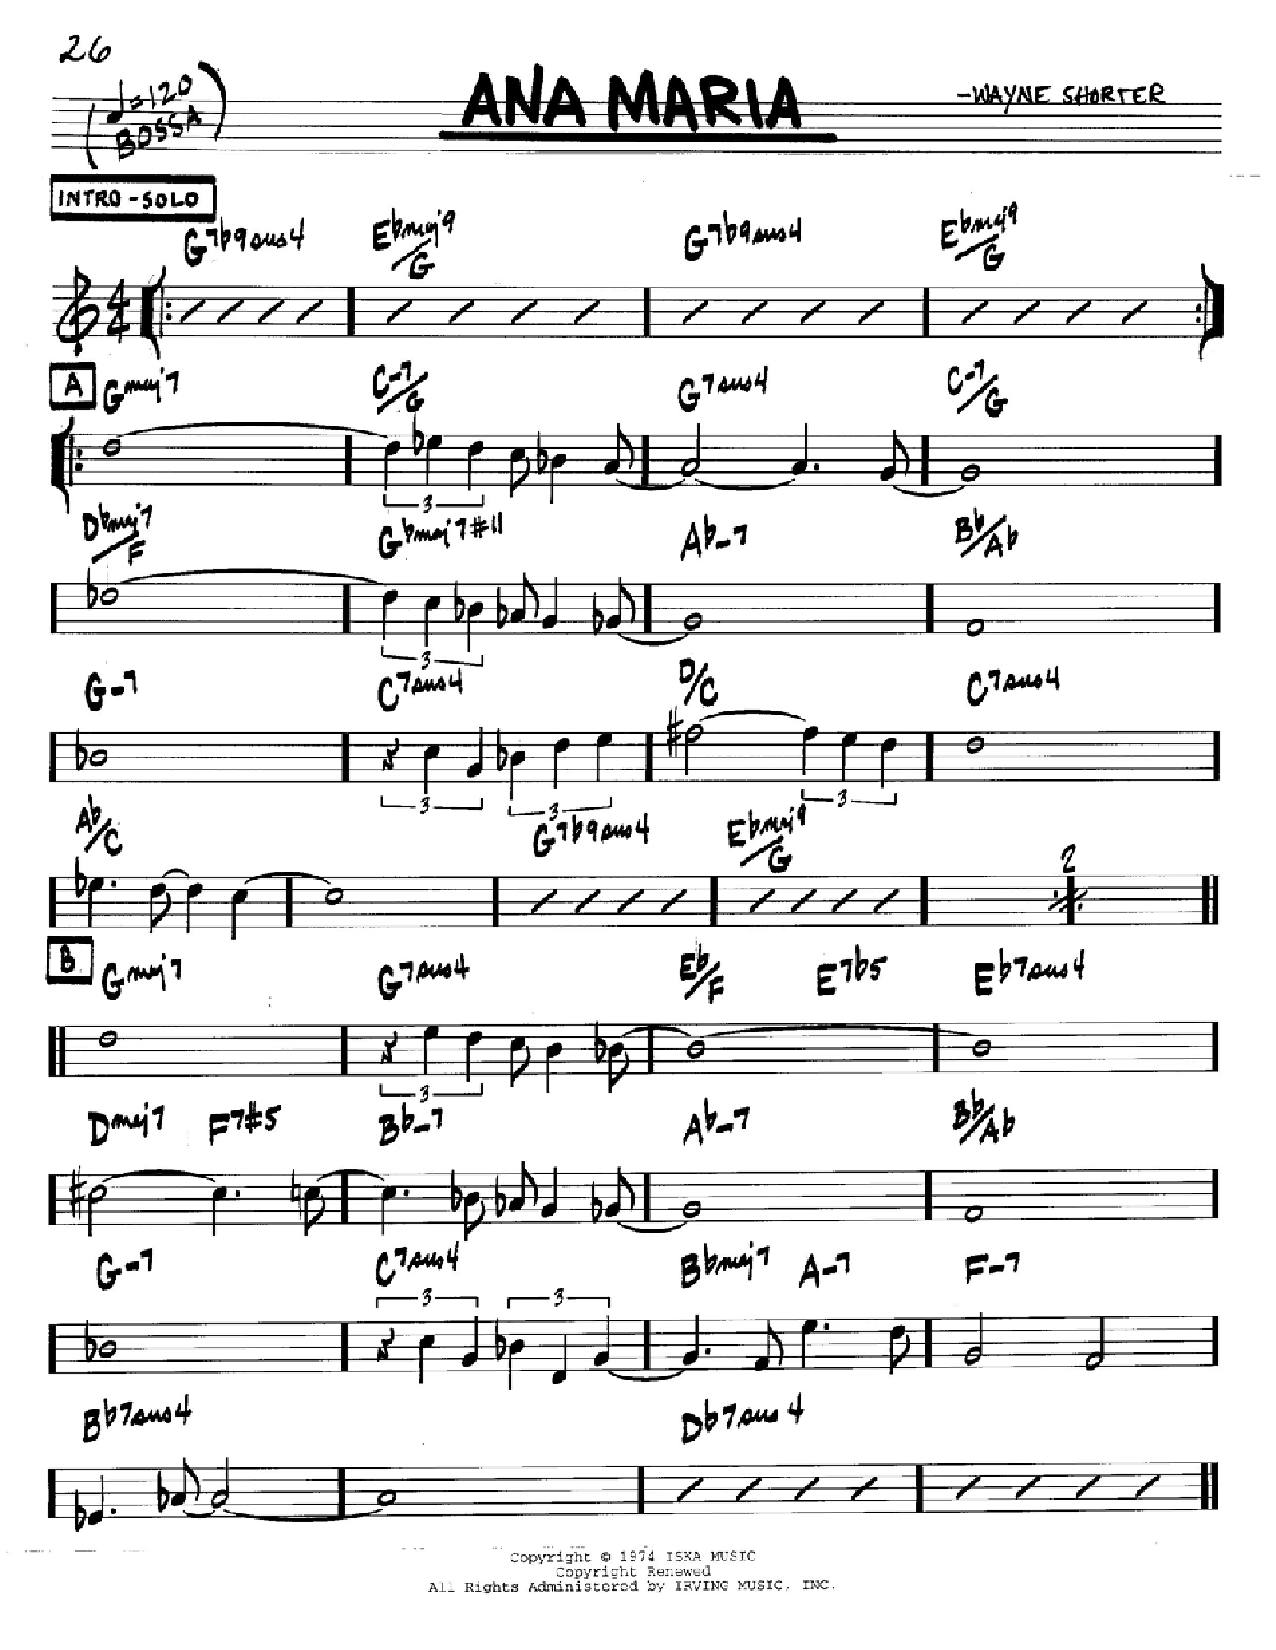 Wayne Shorter Ana Maria Sheet Music Notes & Chords for Real Book - Melody & Chords - Eb Instruments - Download or Print PDF